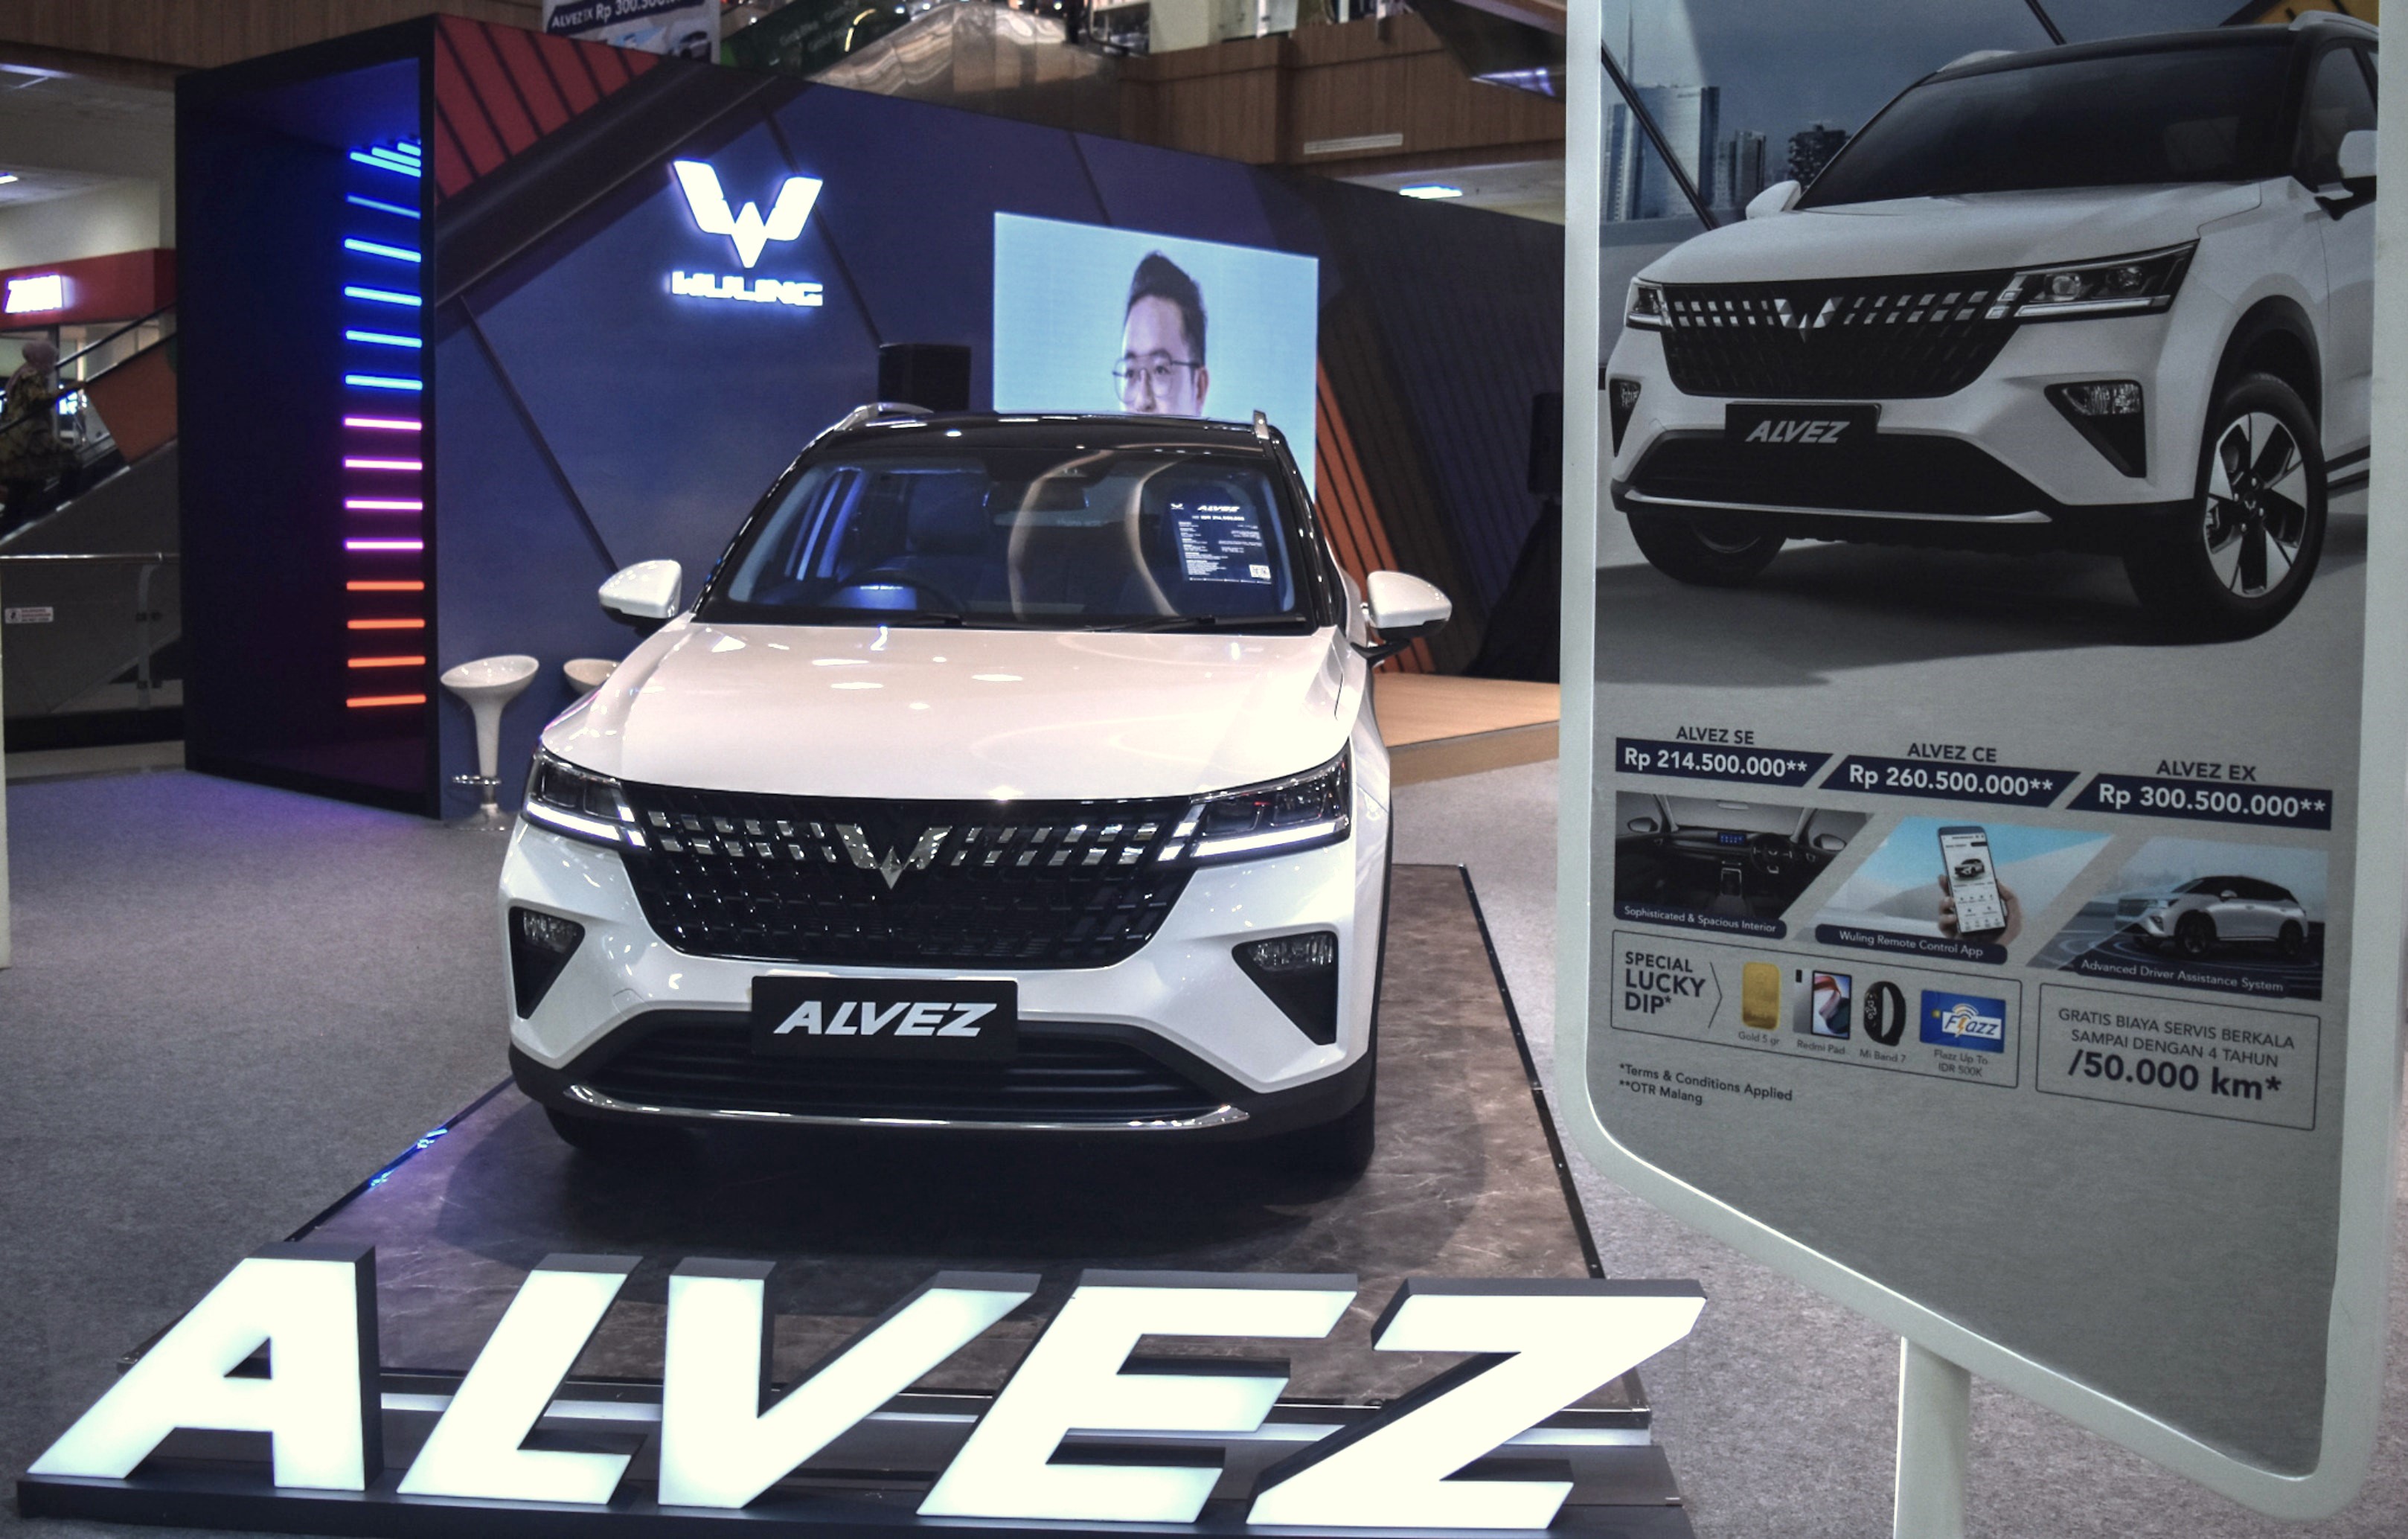 Image Alvez, Compact SUV Terbaru dari Wuling Menyapa Masyarakat Kota Malang